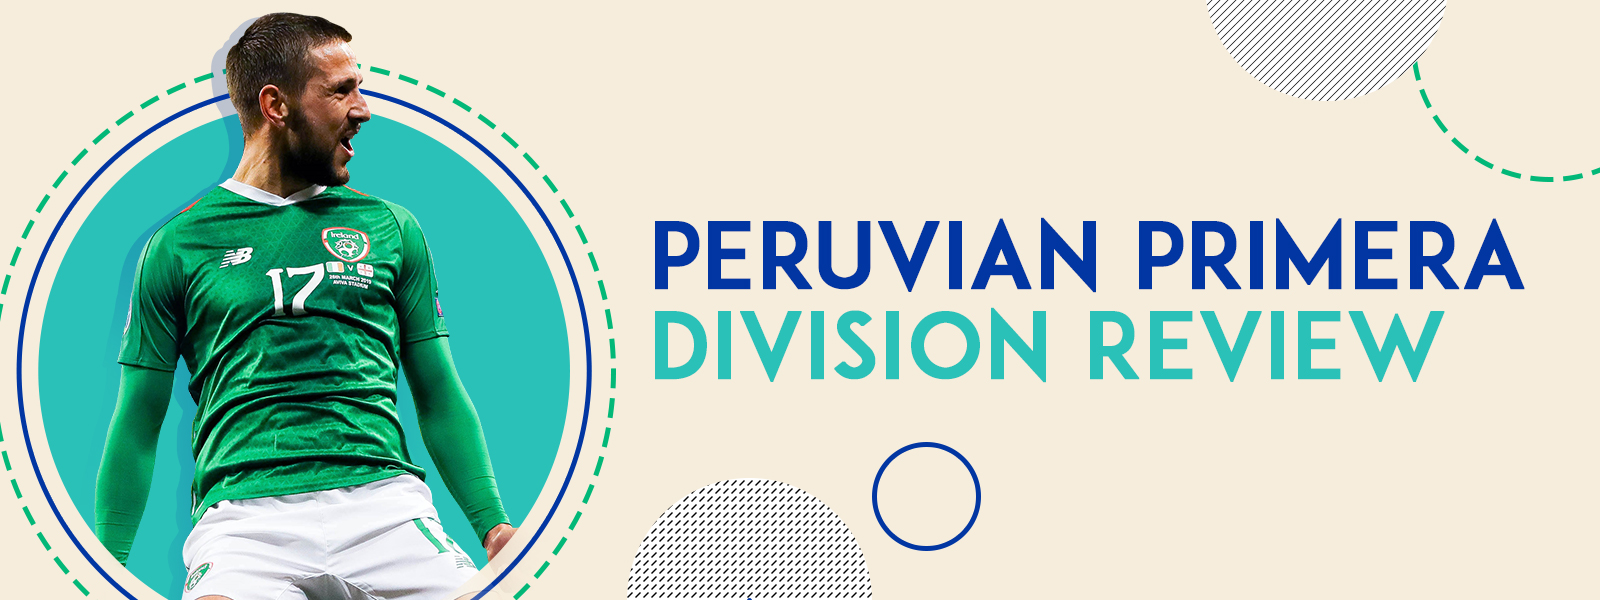 Peruvian Primera Division Review